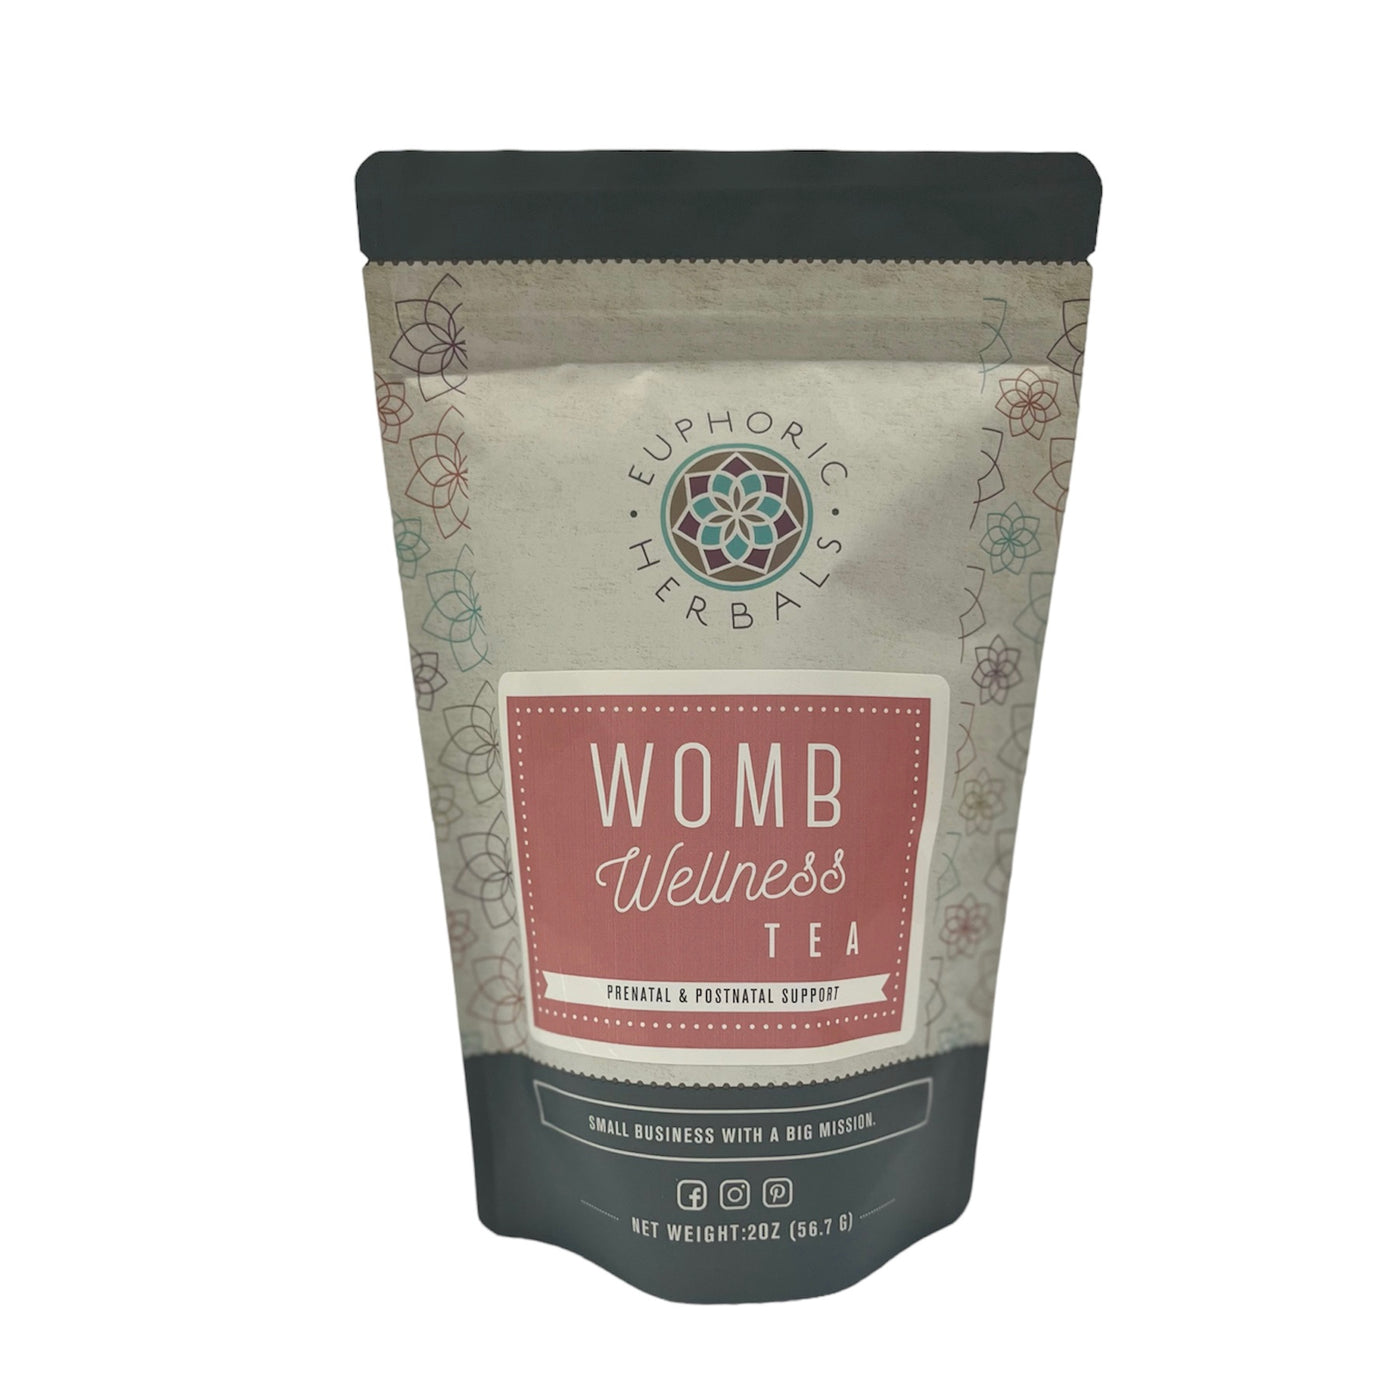 Womb Wellness Tea